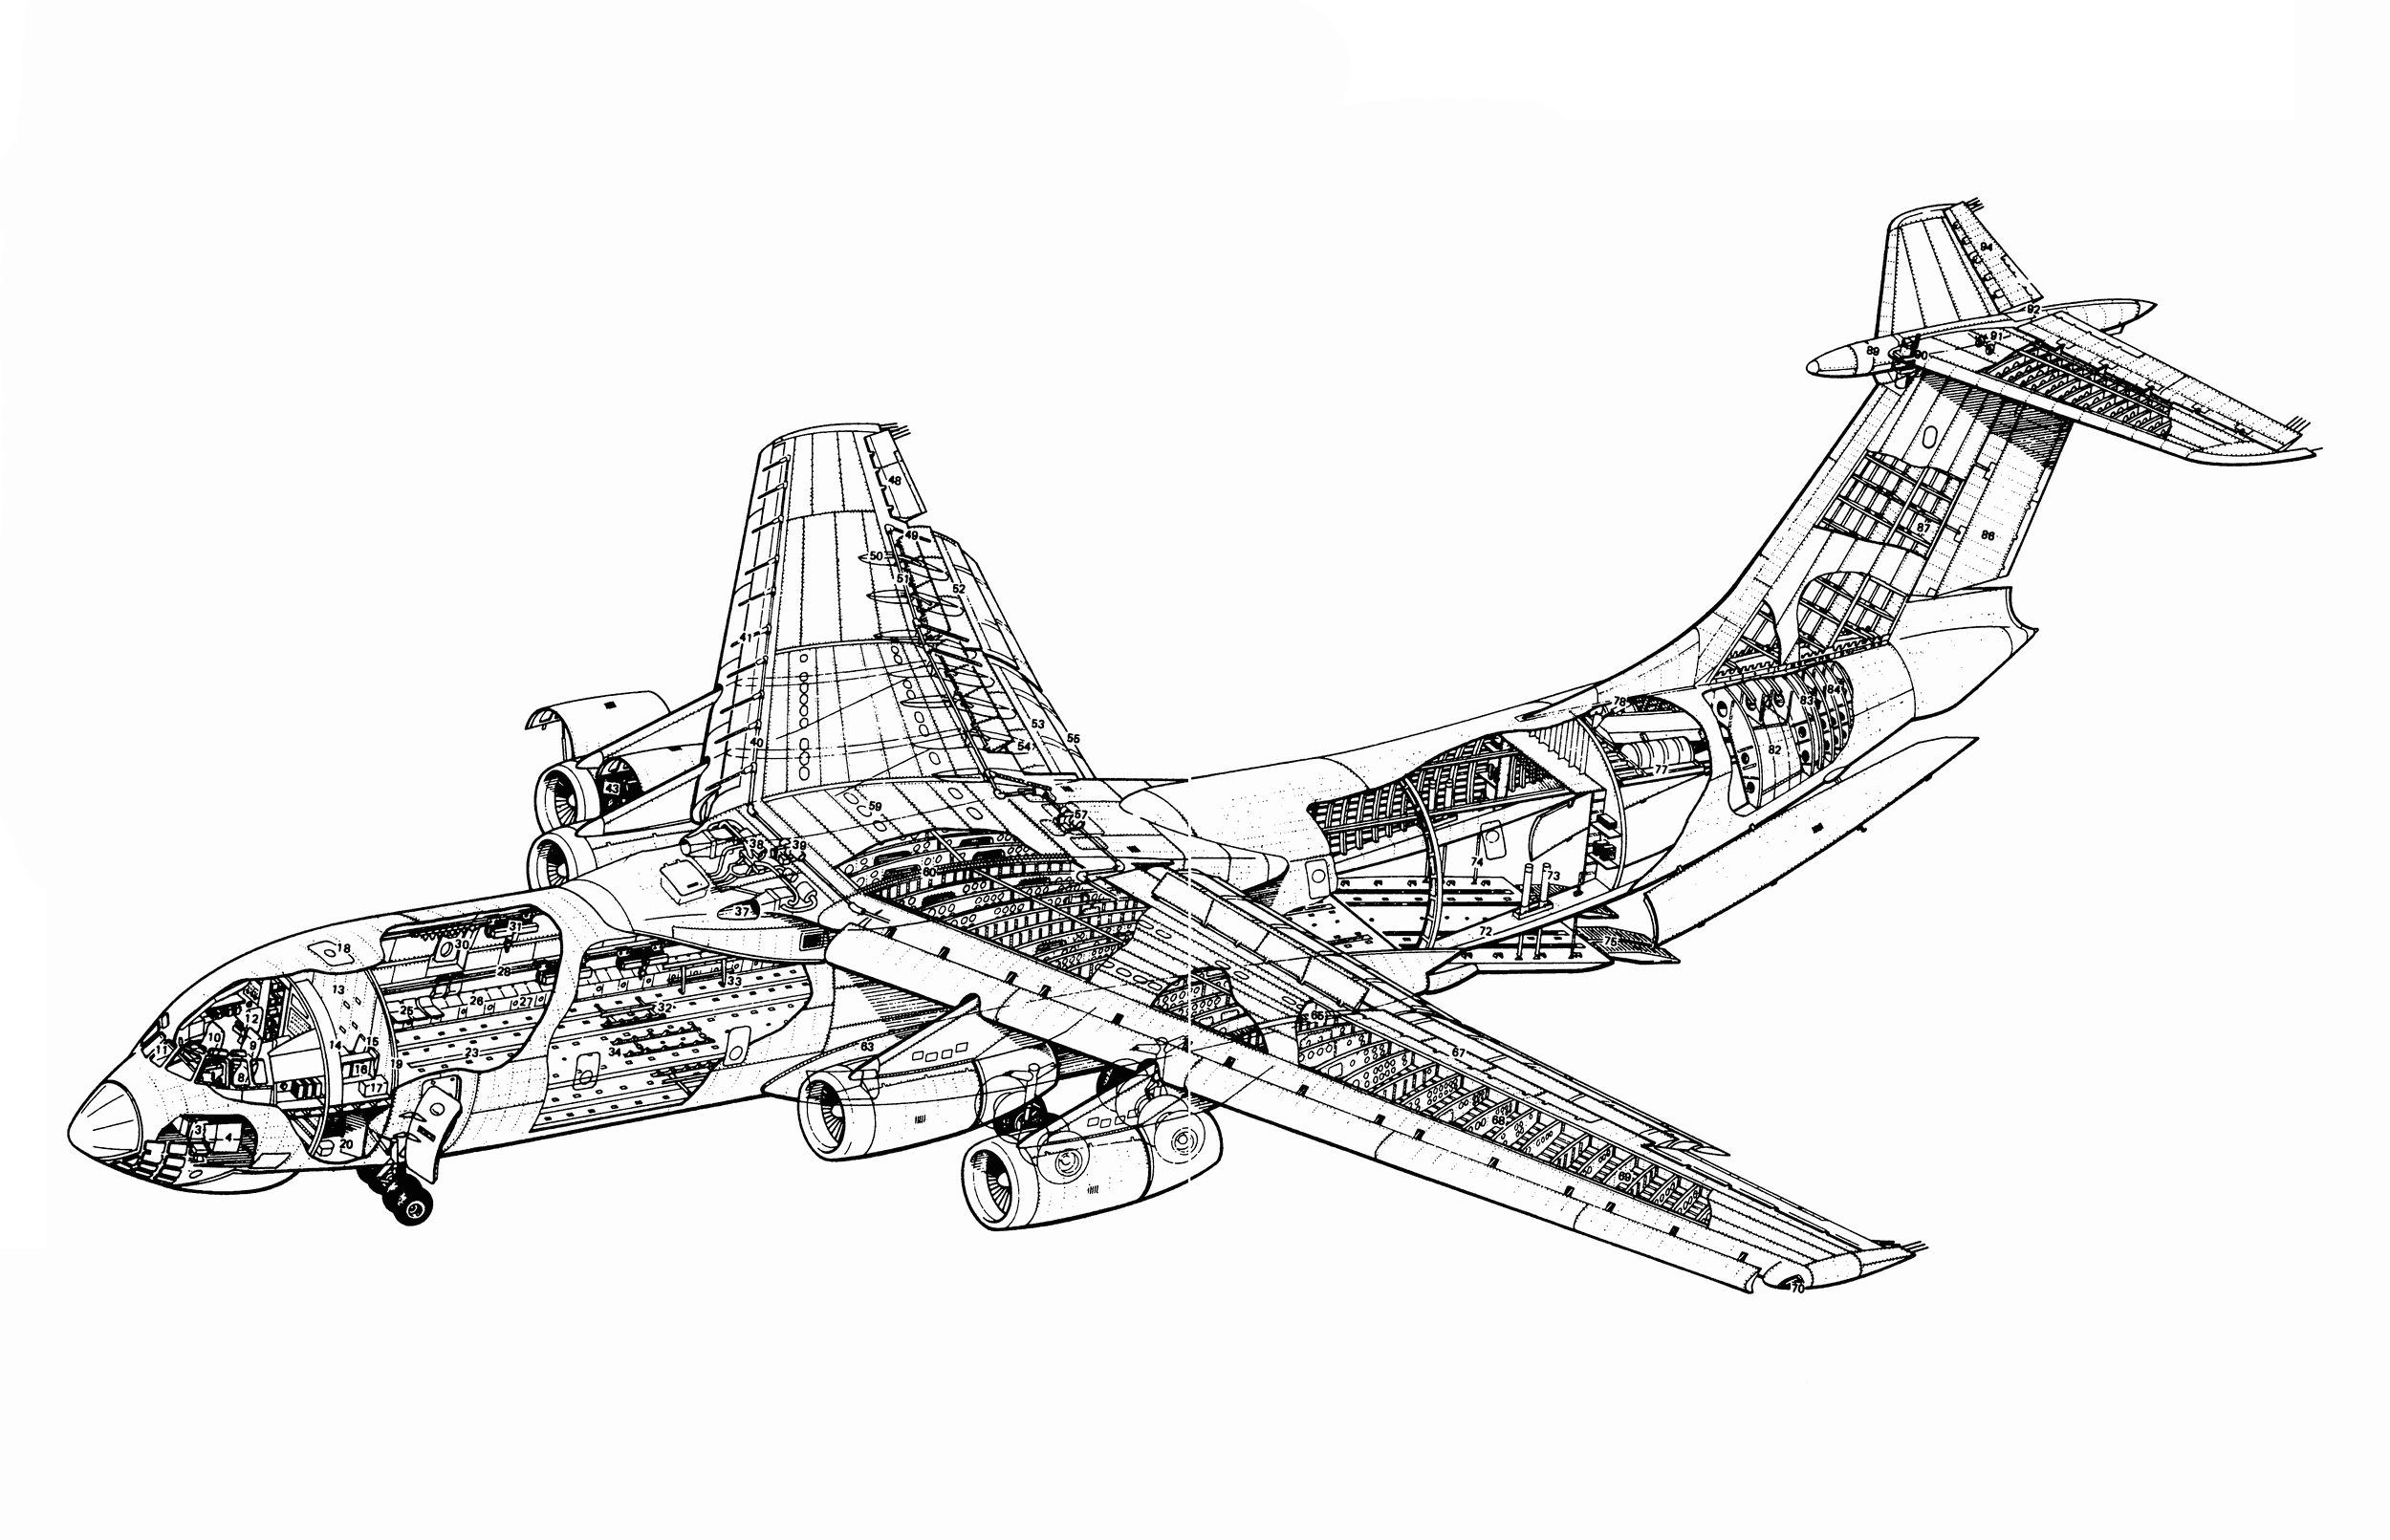 Ilyushin Il-76 cutaway drawing